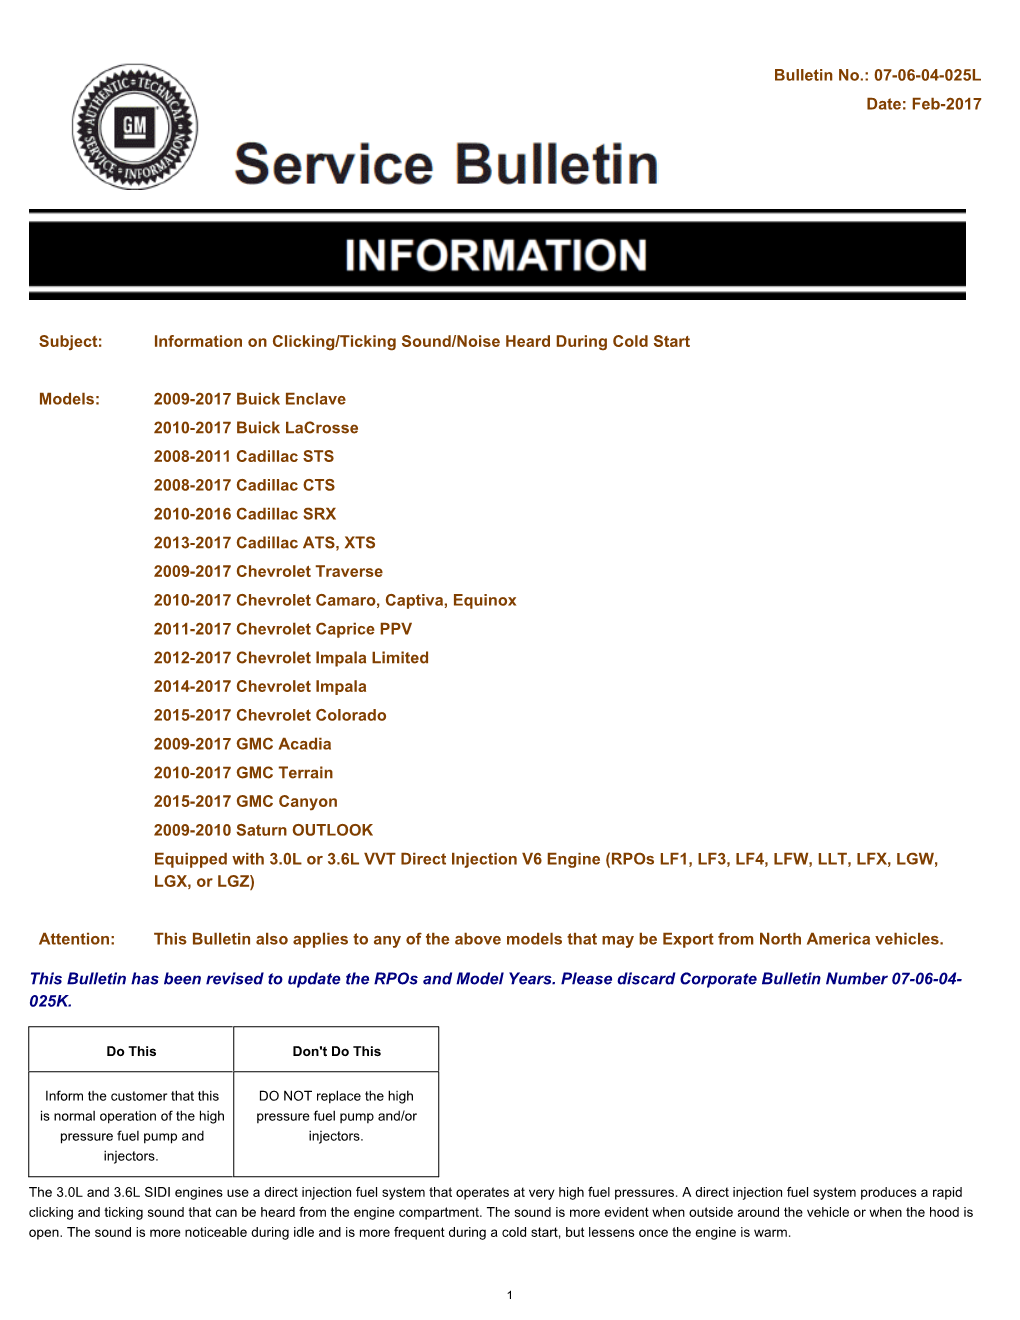 Bulletin No.: 07-06-04-025L Date: Feb-2017 Subject